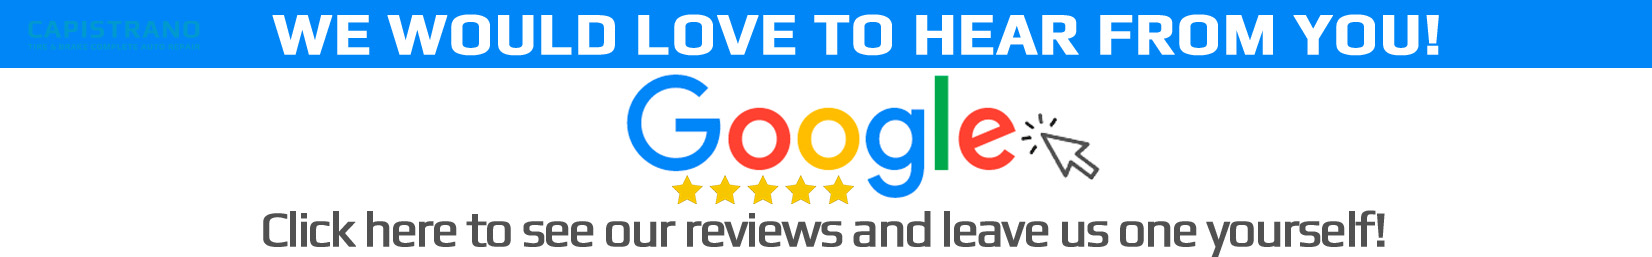 google-reviews-banner